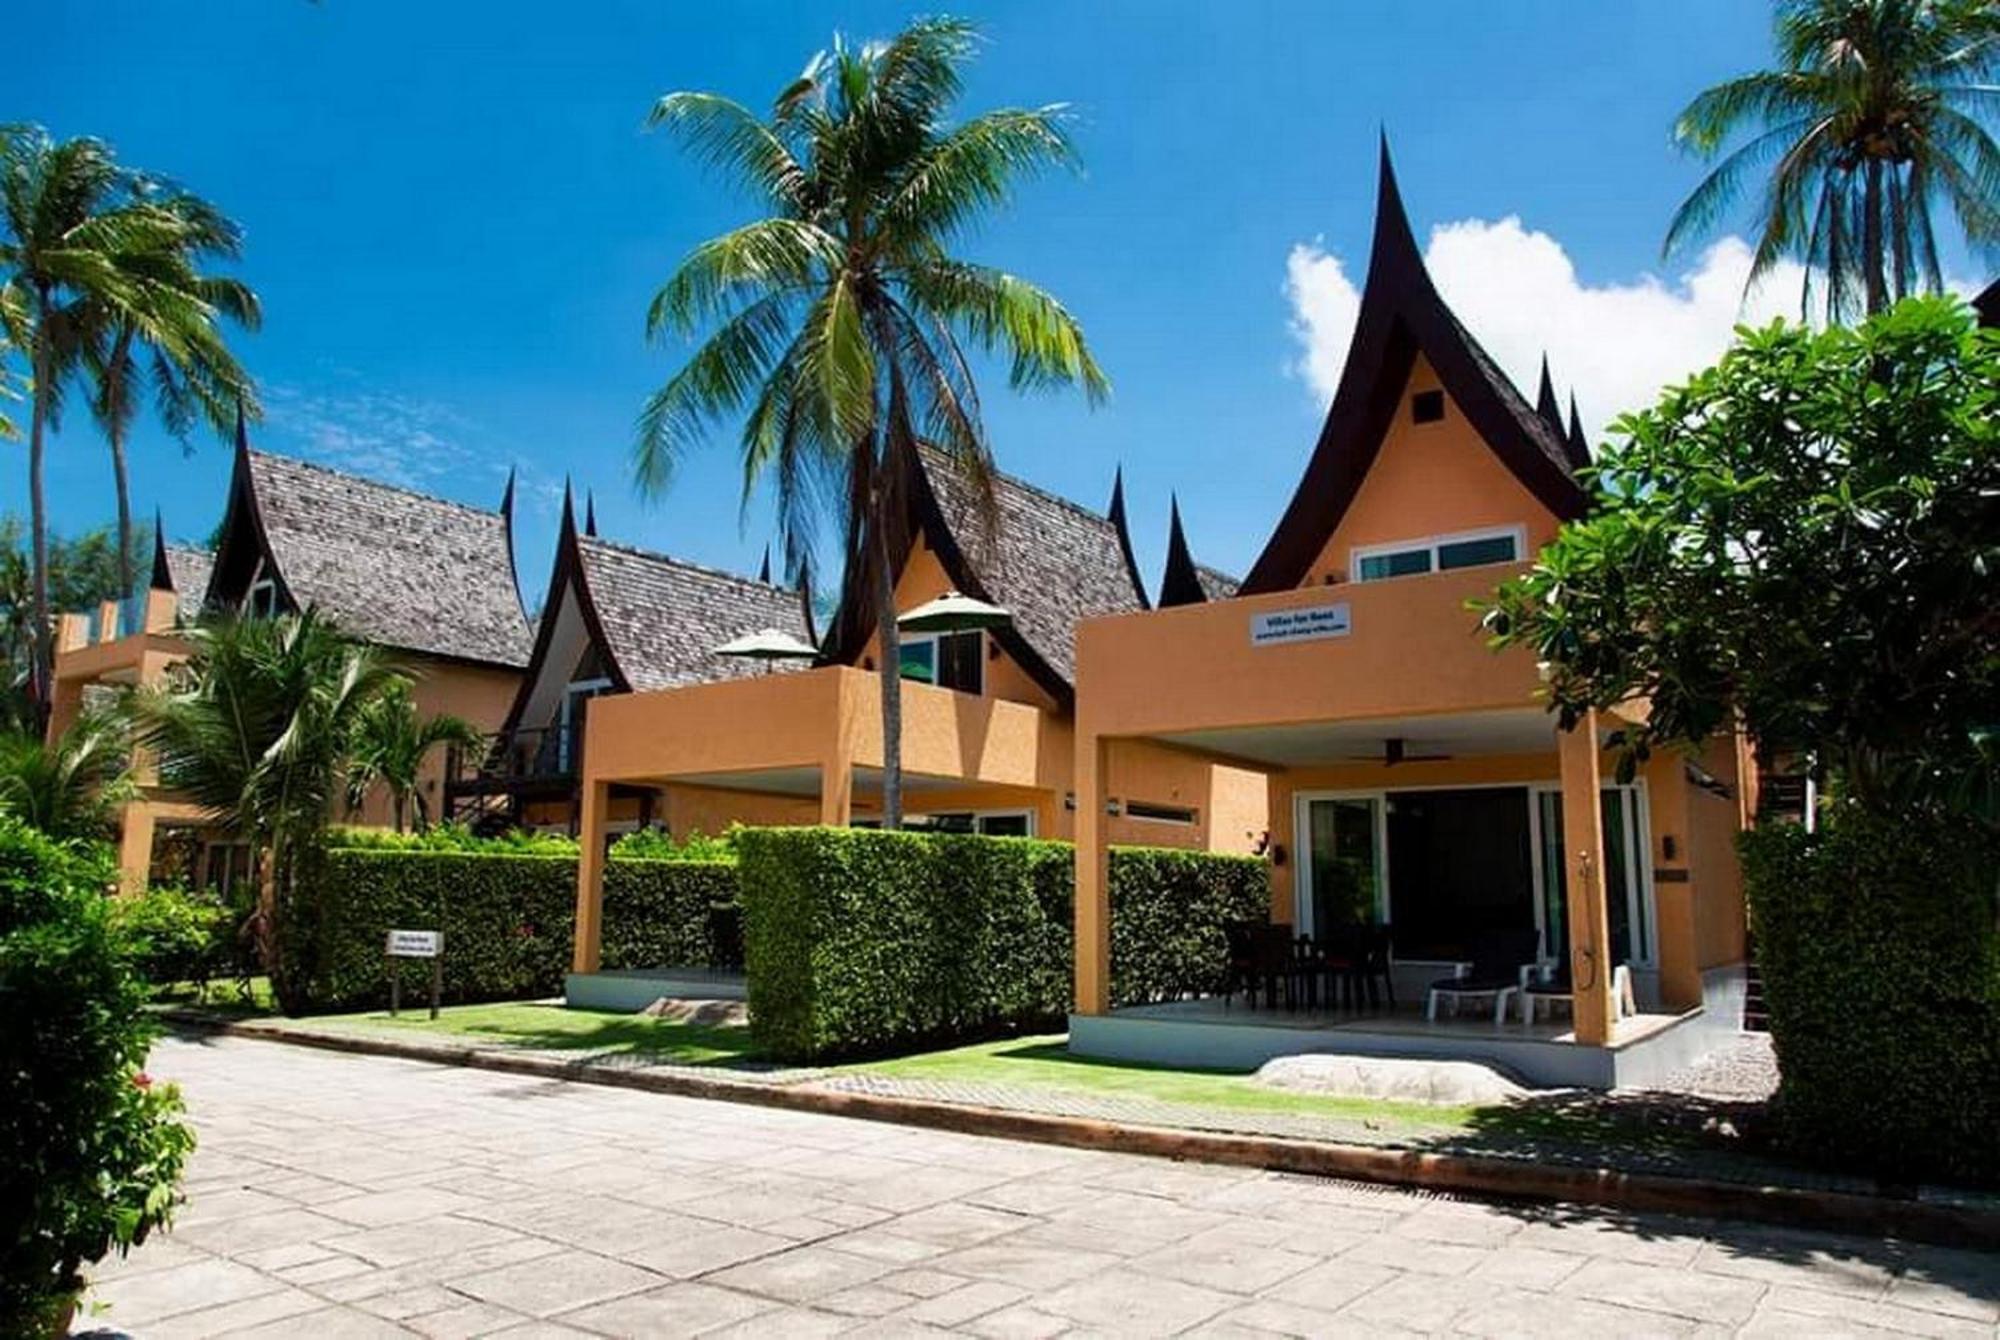 Siam Royal View Resort Apartments เกาะช้าง ภายนอก รูปภาพ